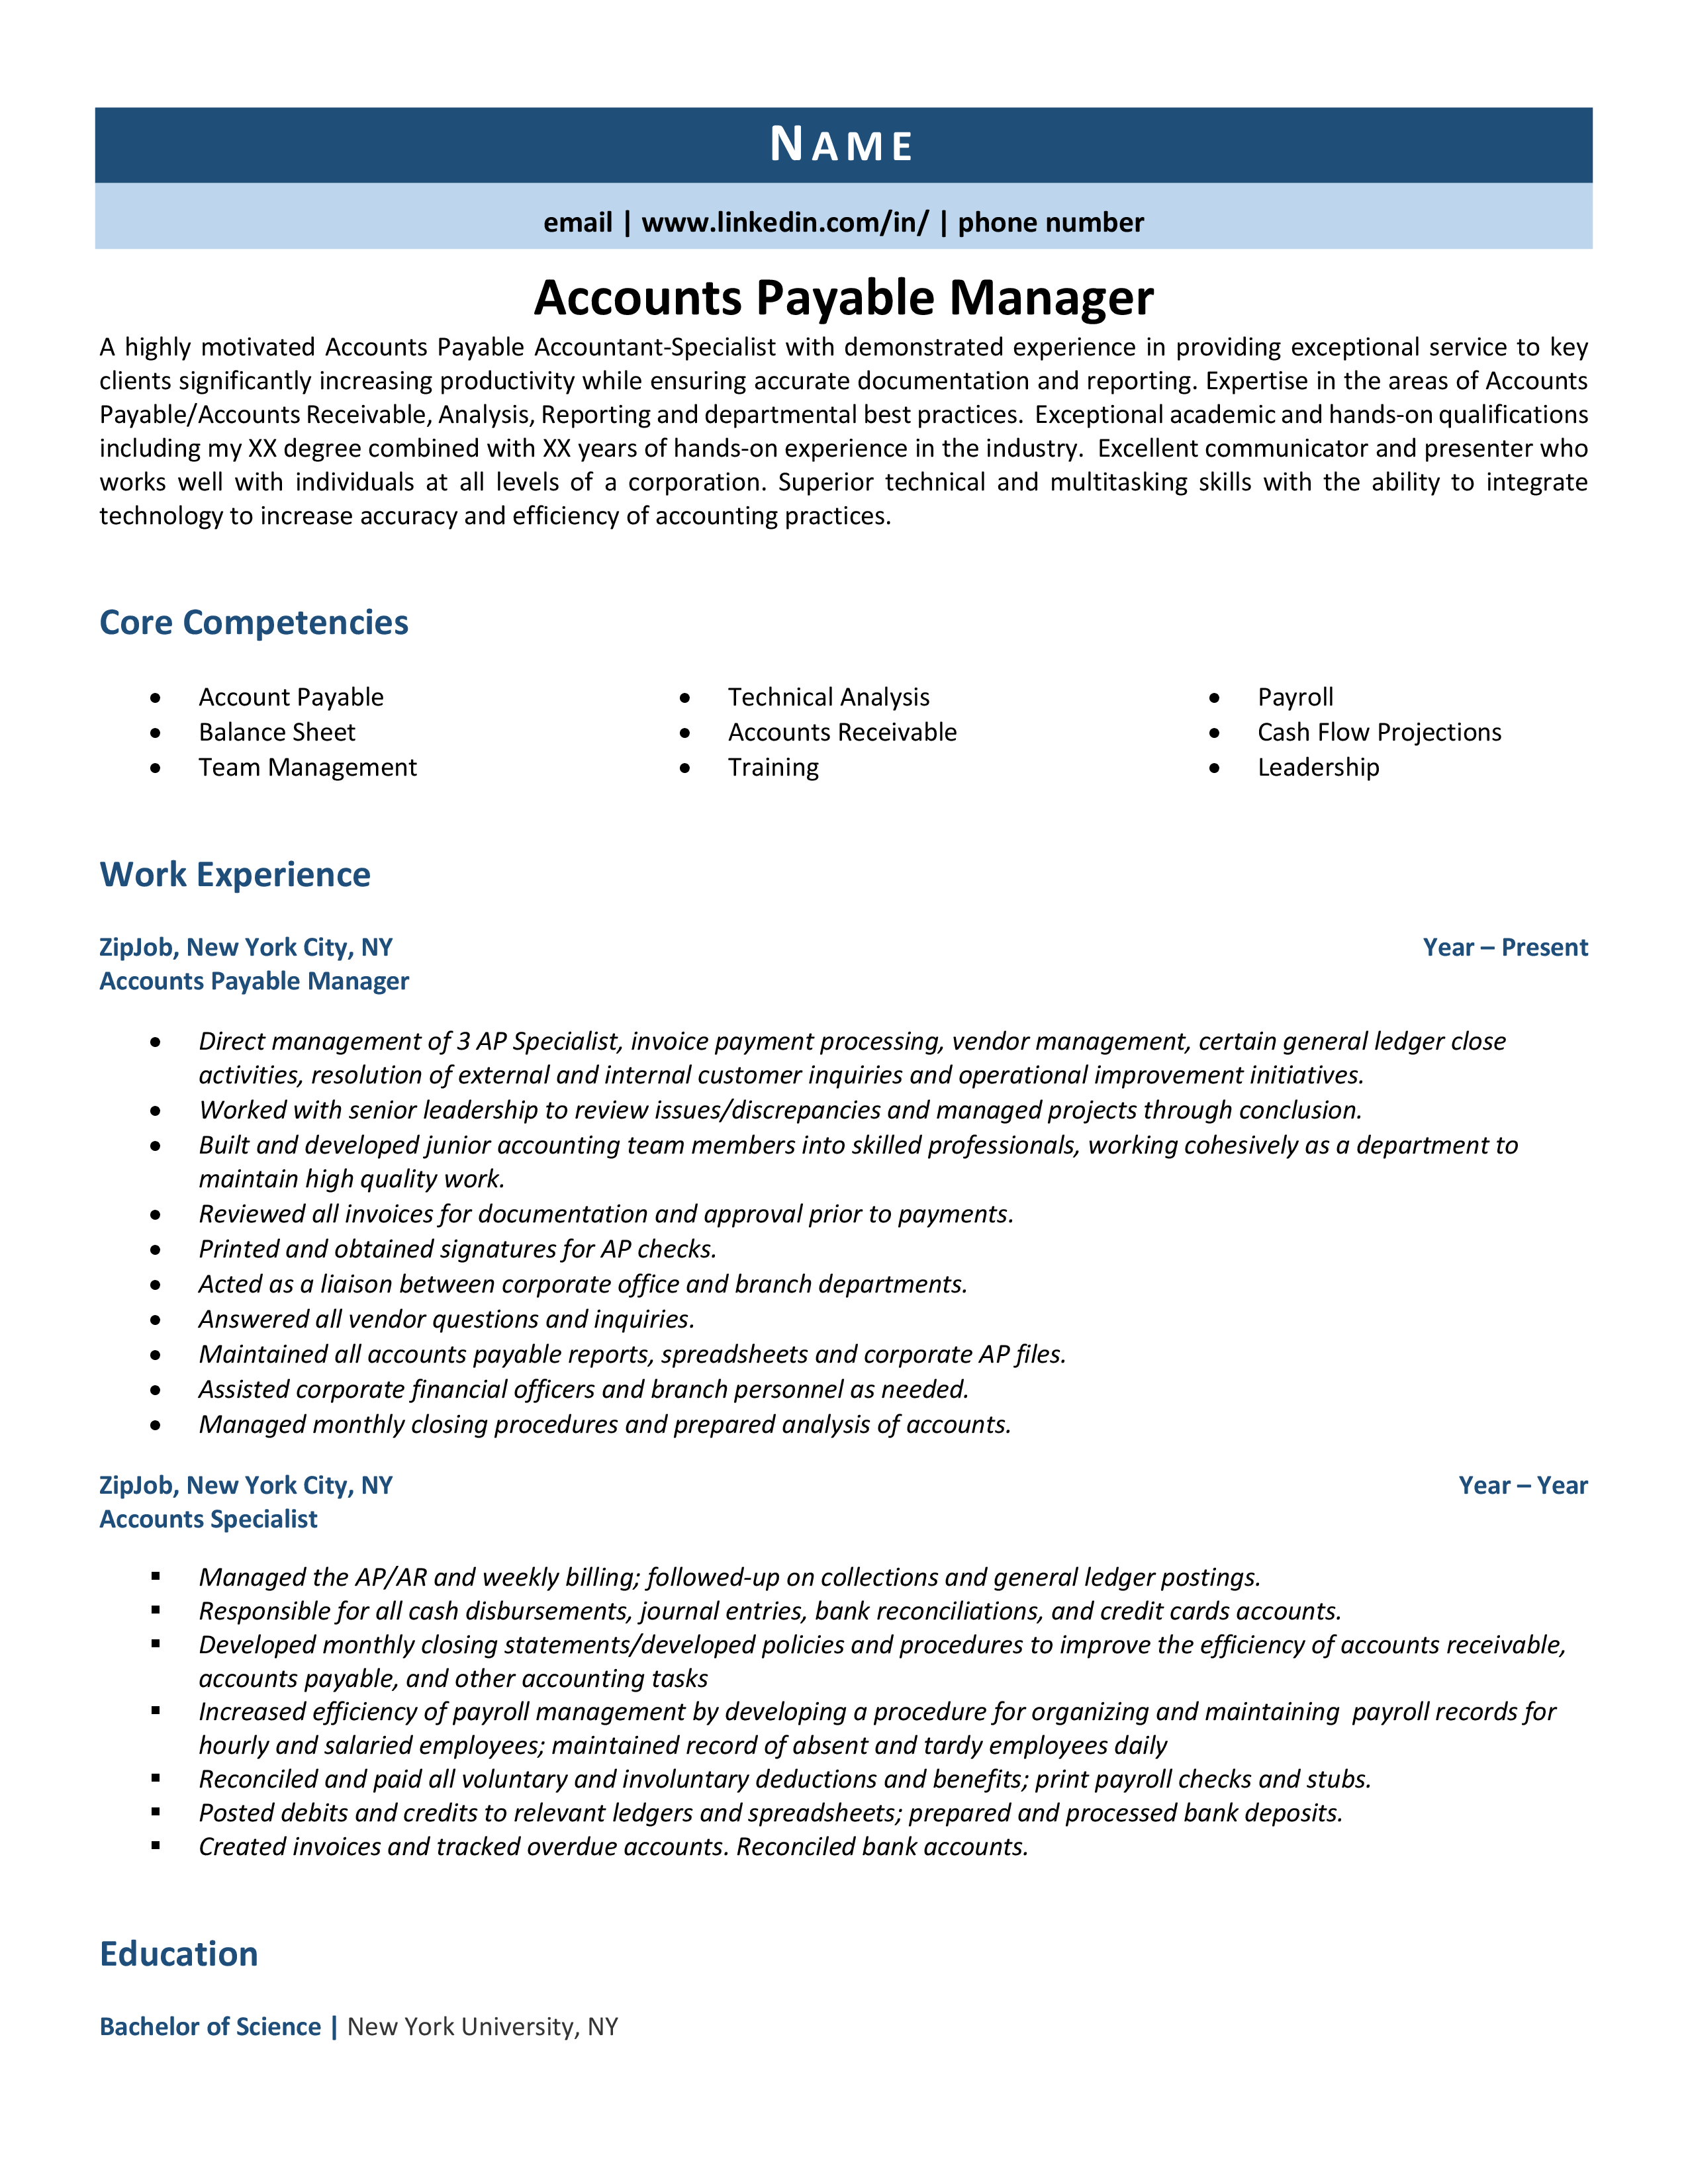 accounts payable job description resume sample